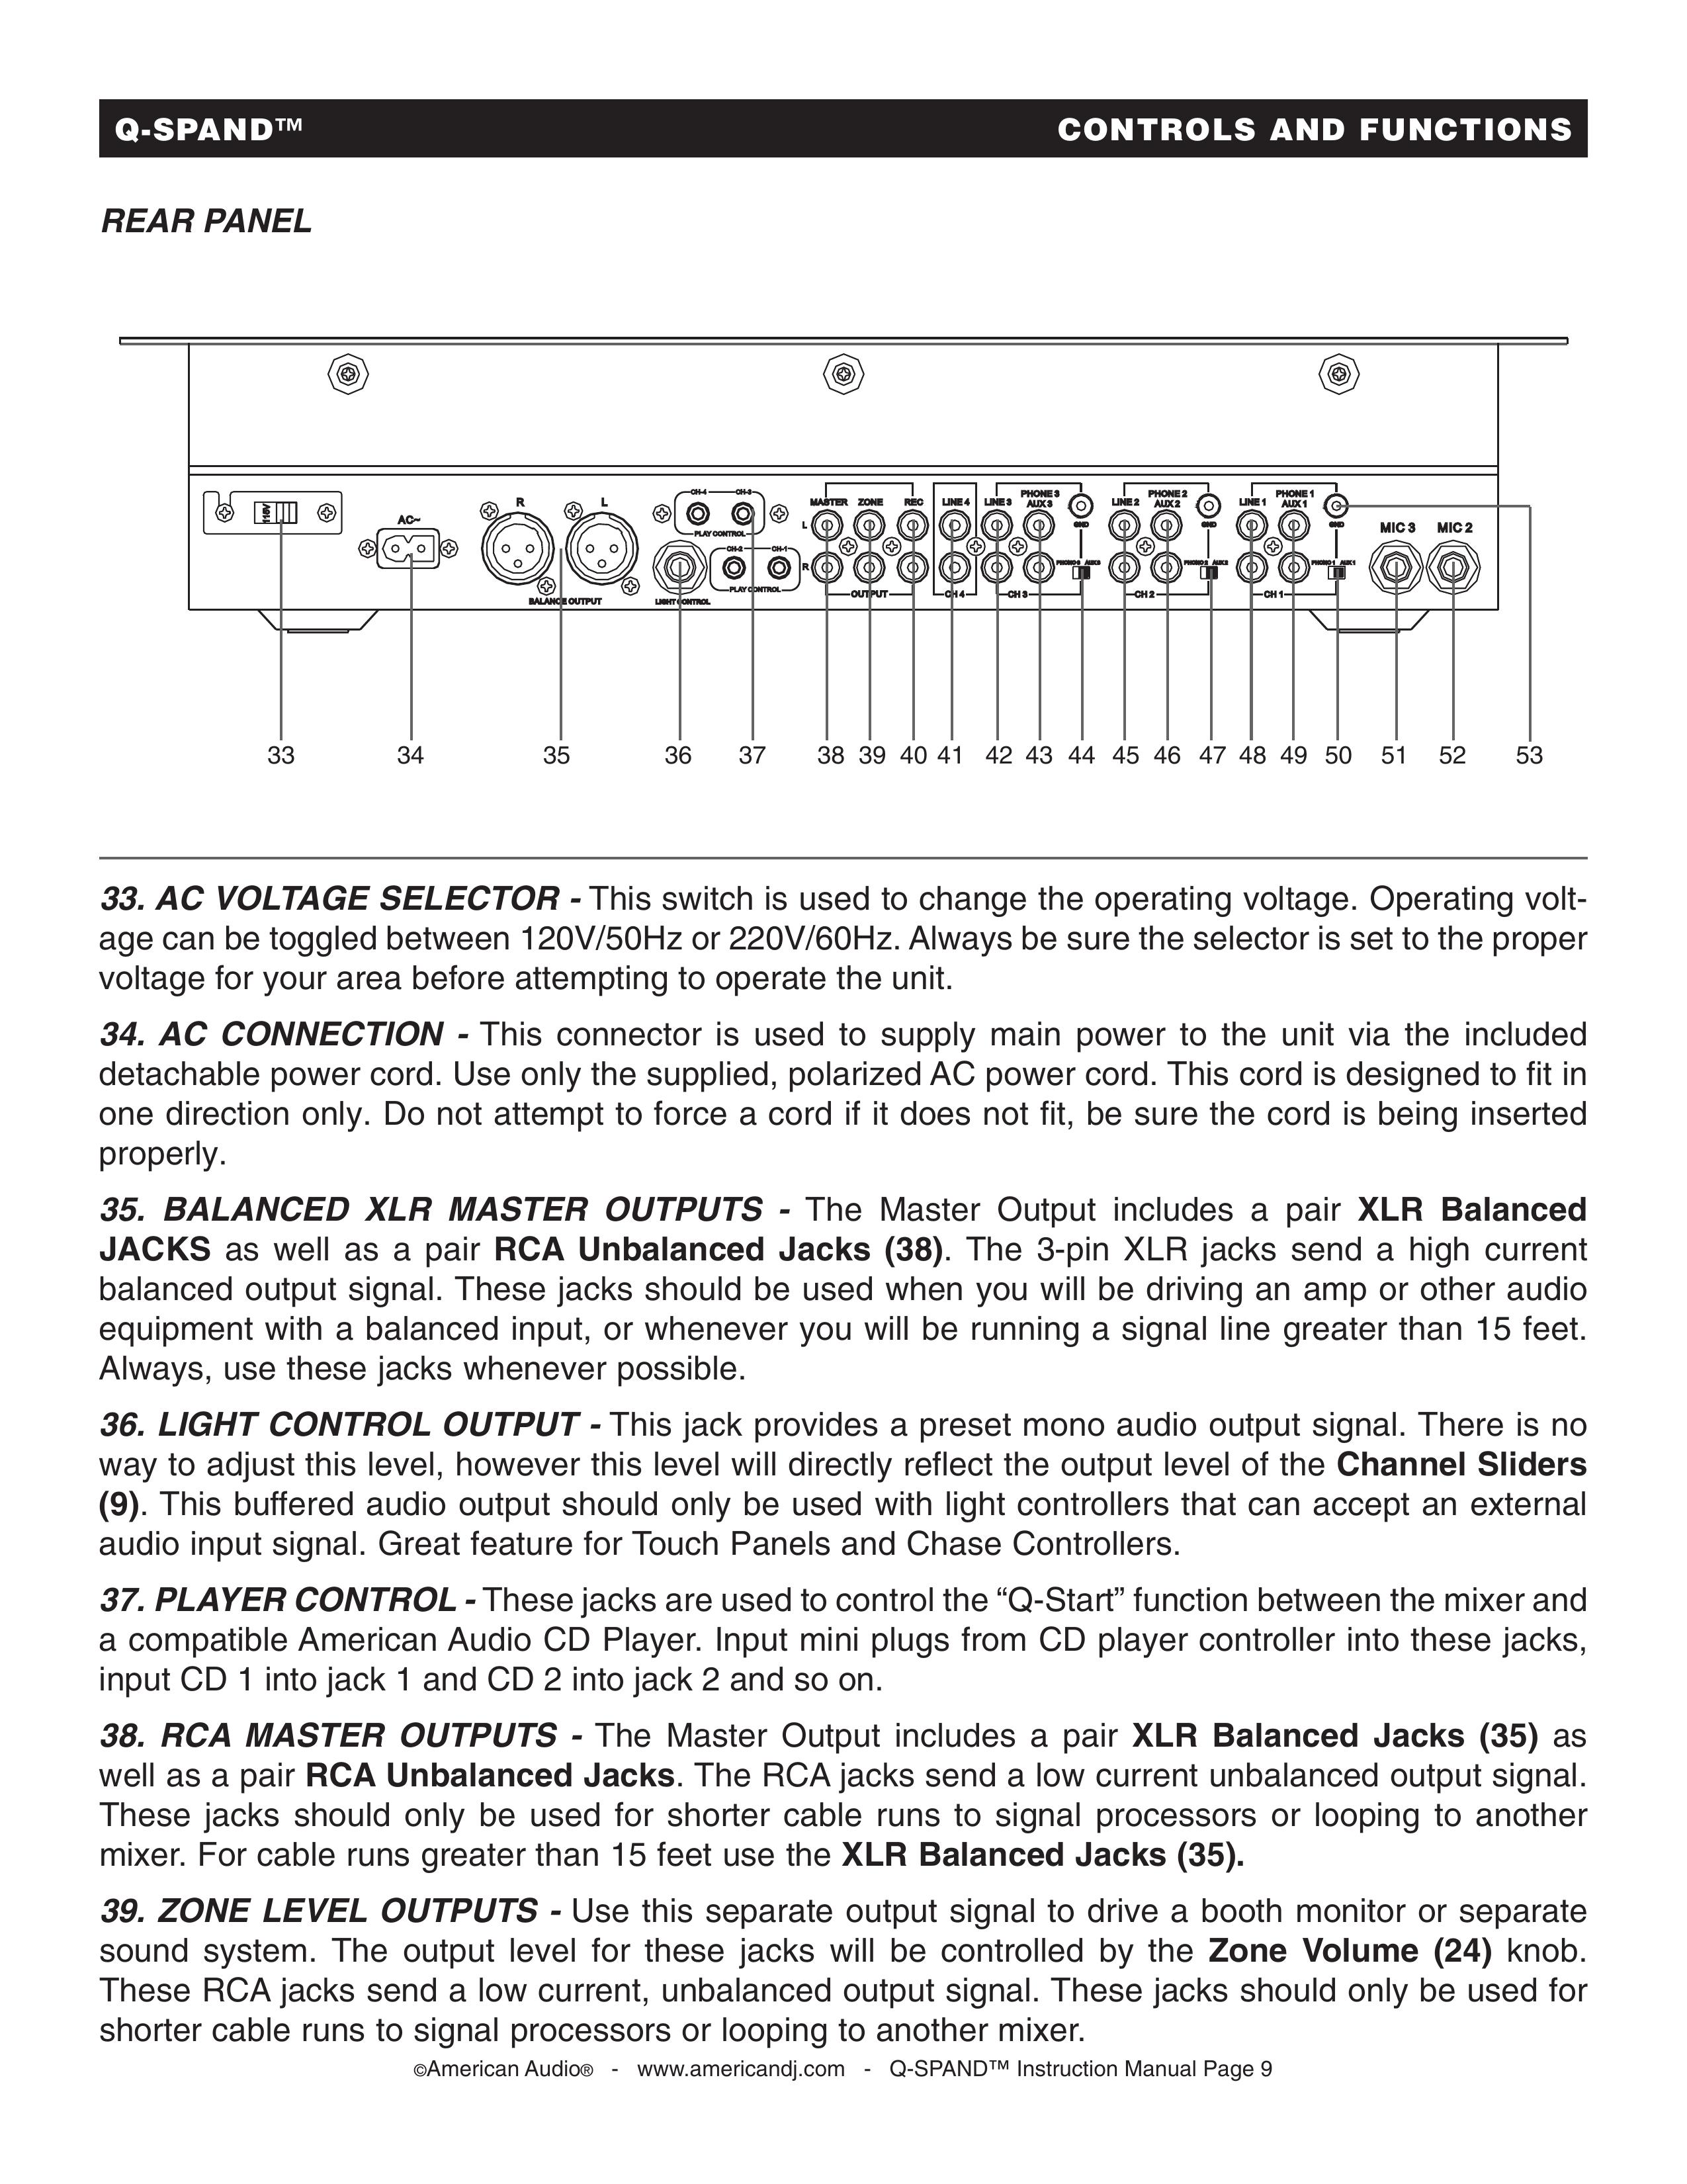 American Audio Q-SPAND DJ Equipment User Manual (Page 9)